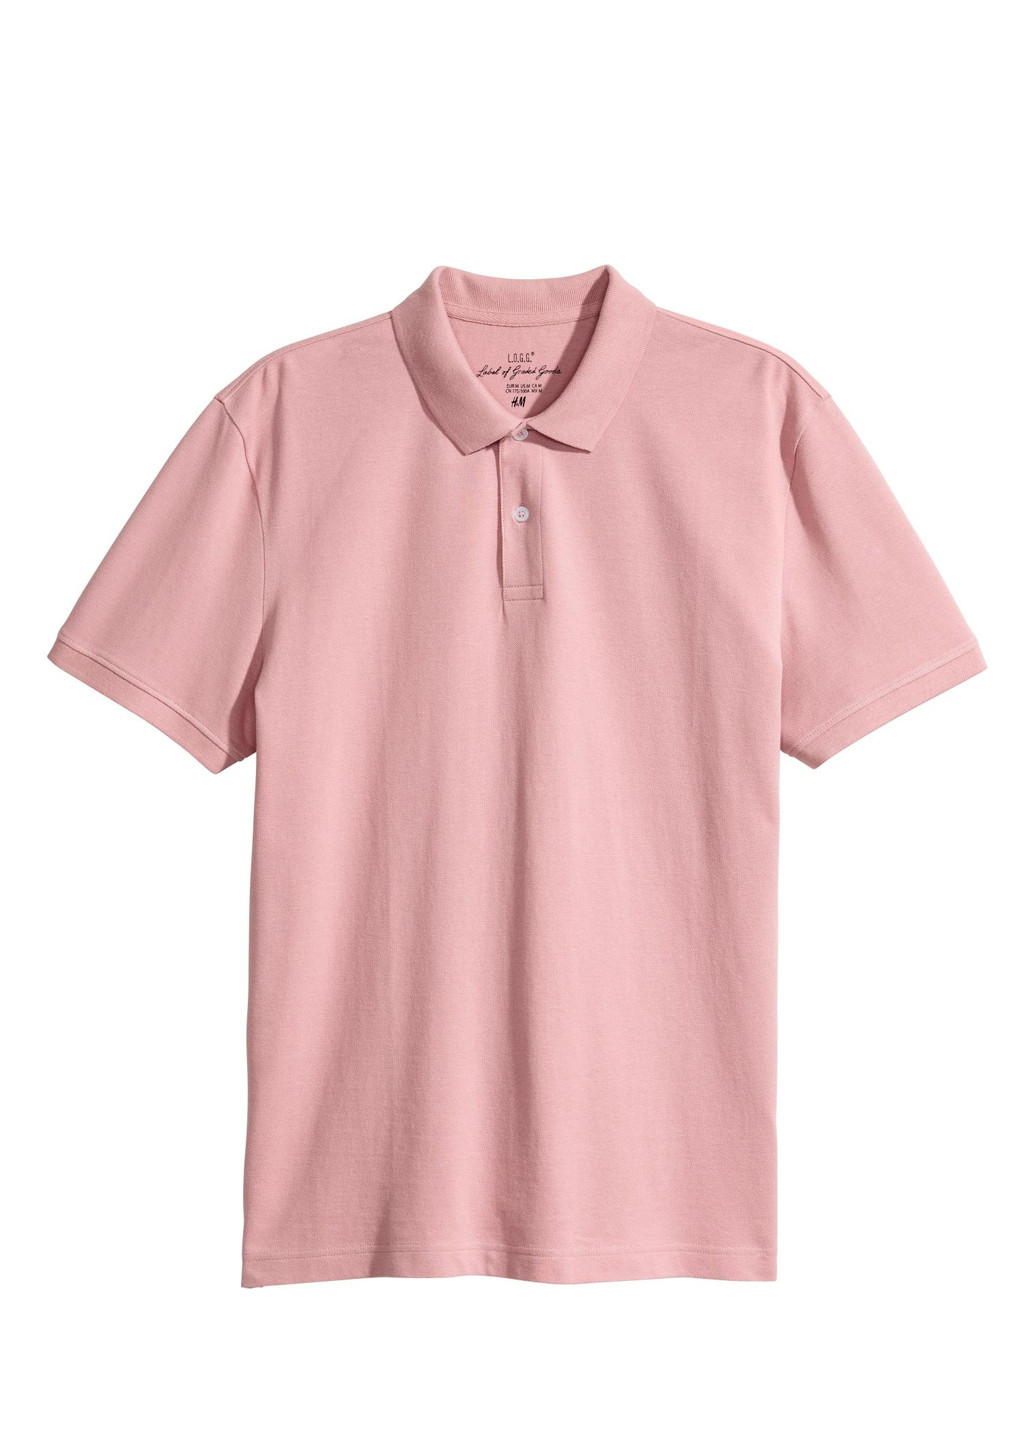 Светло-розовая футболка-поло для мужчин H&M однотонная